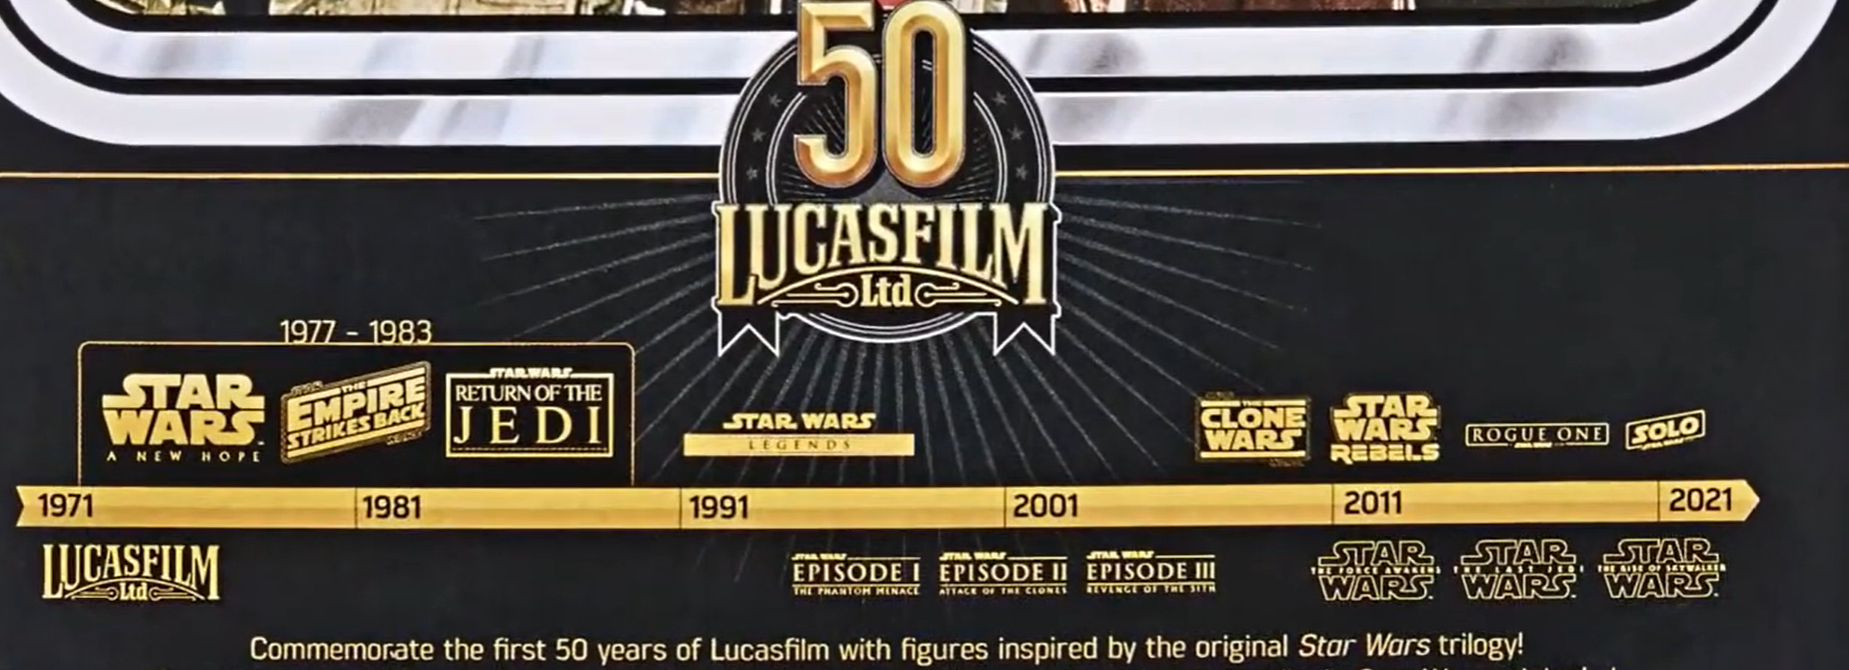 Lucasfilm Star Wars release timeline